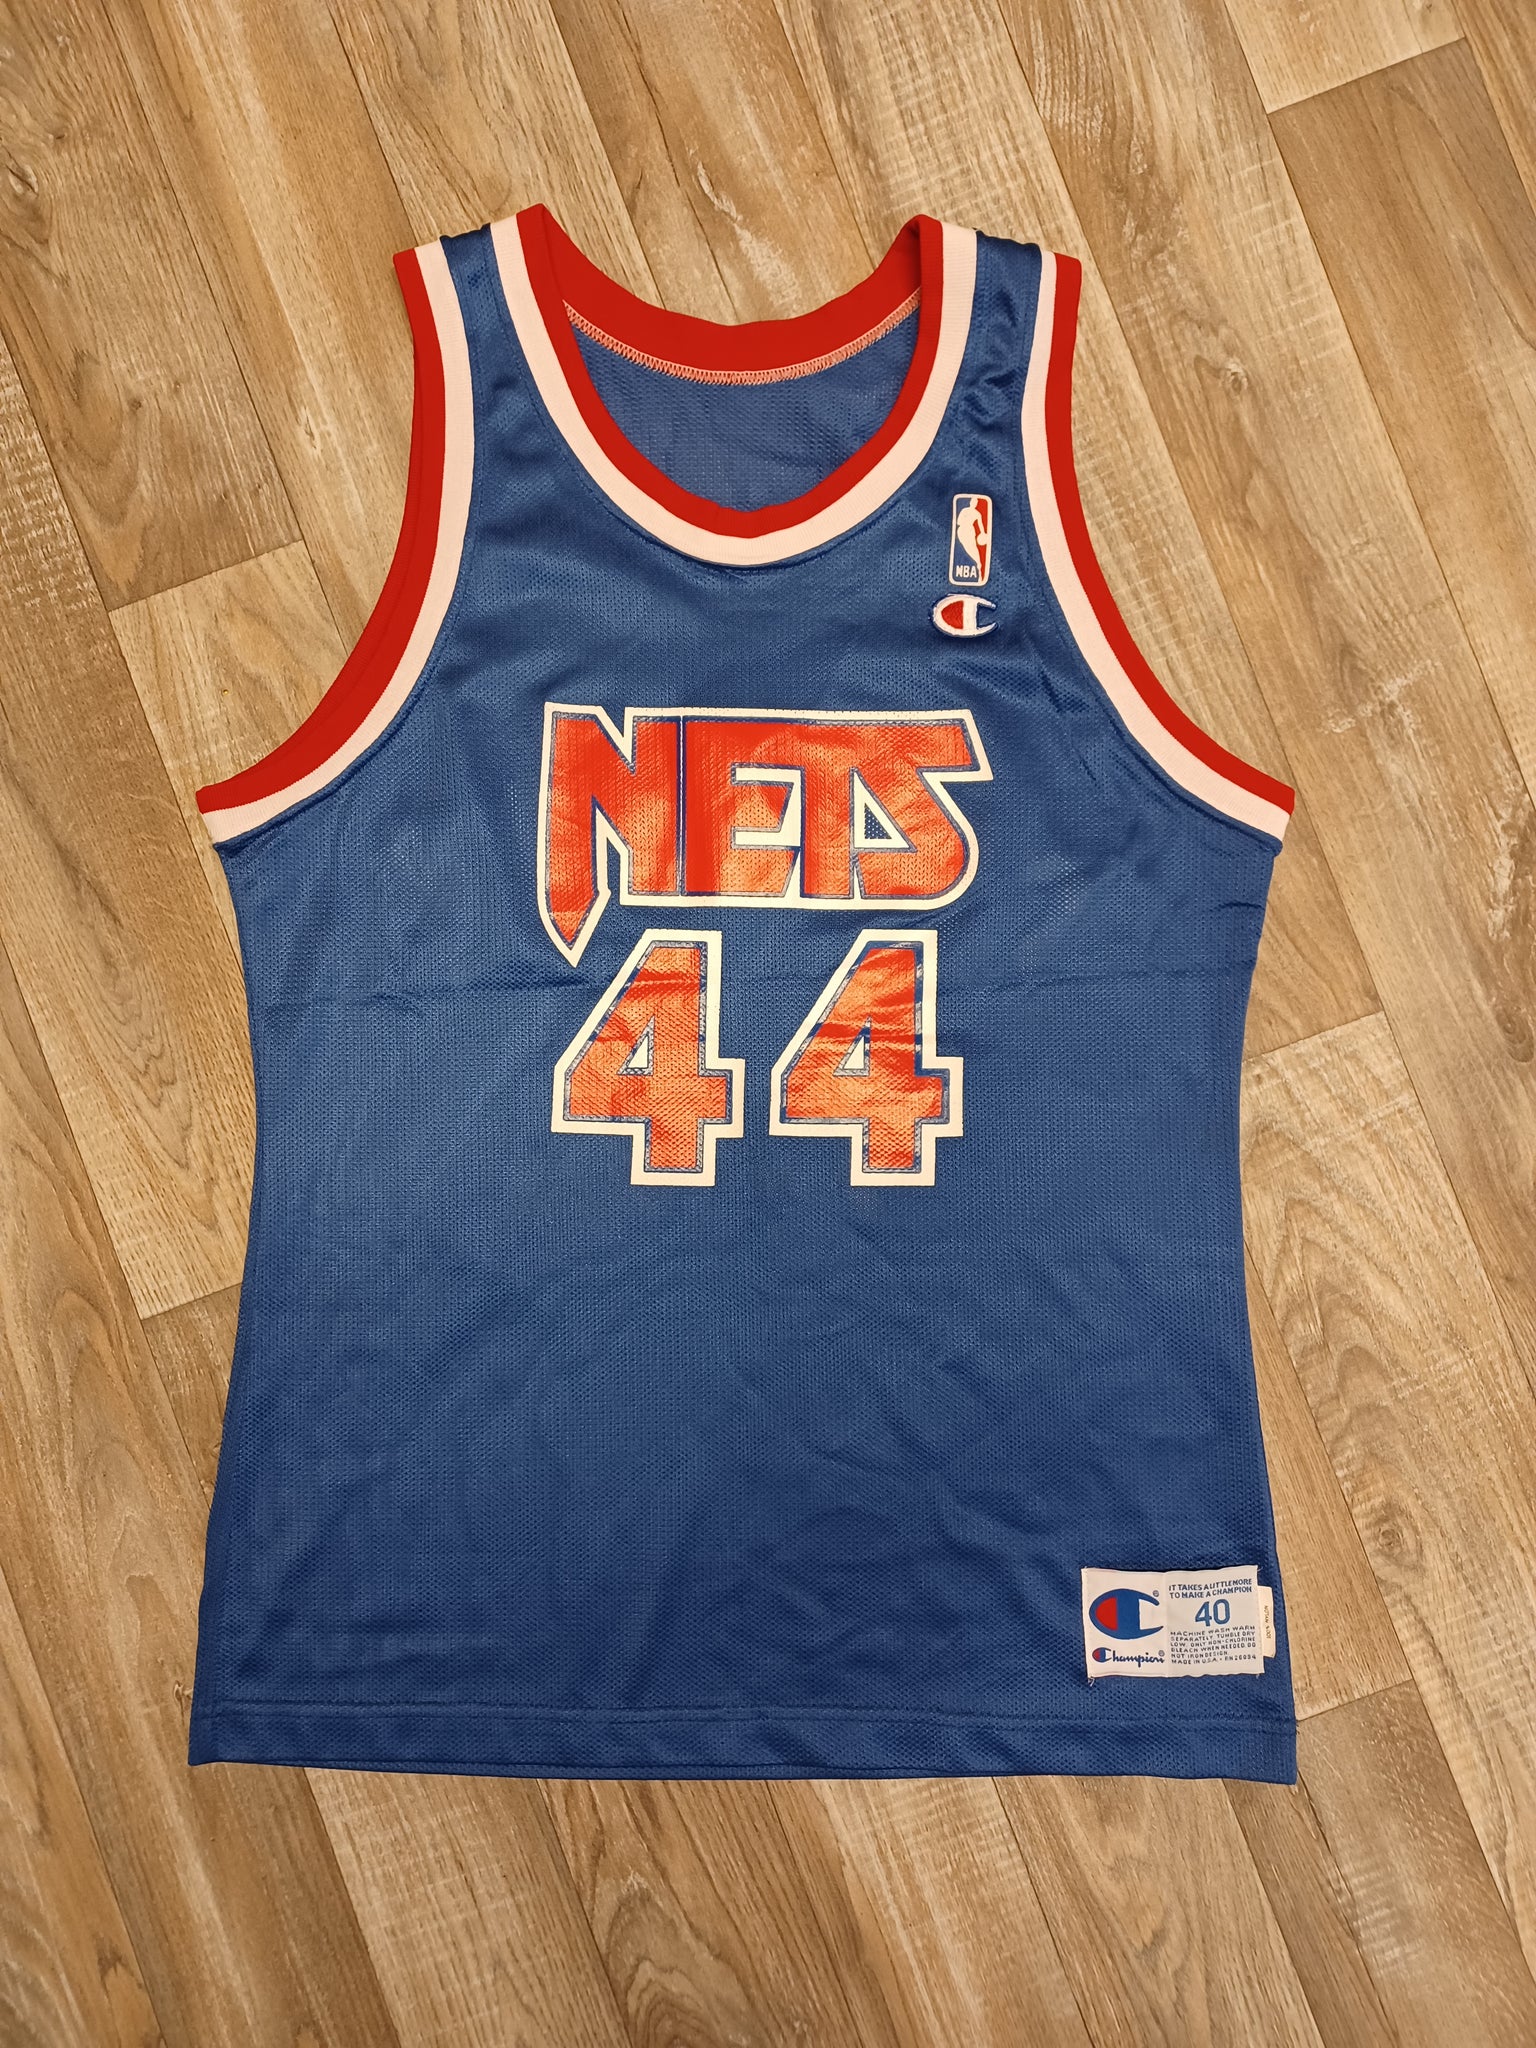 Deron Williams Retro Nets Uniforms